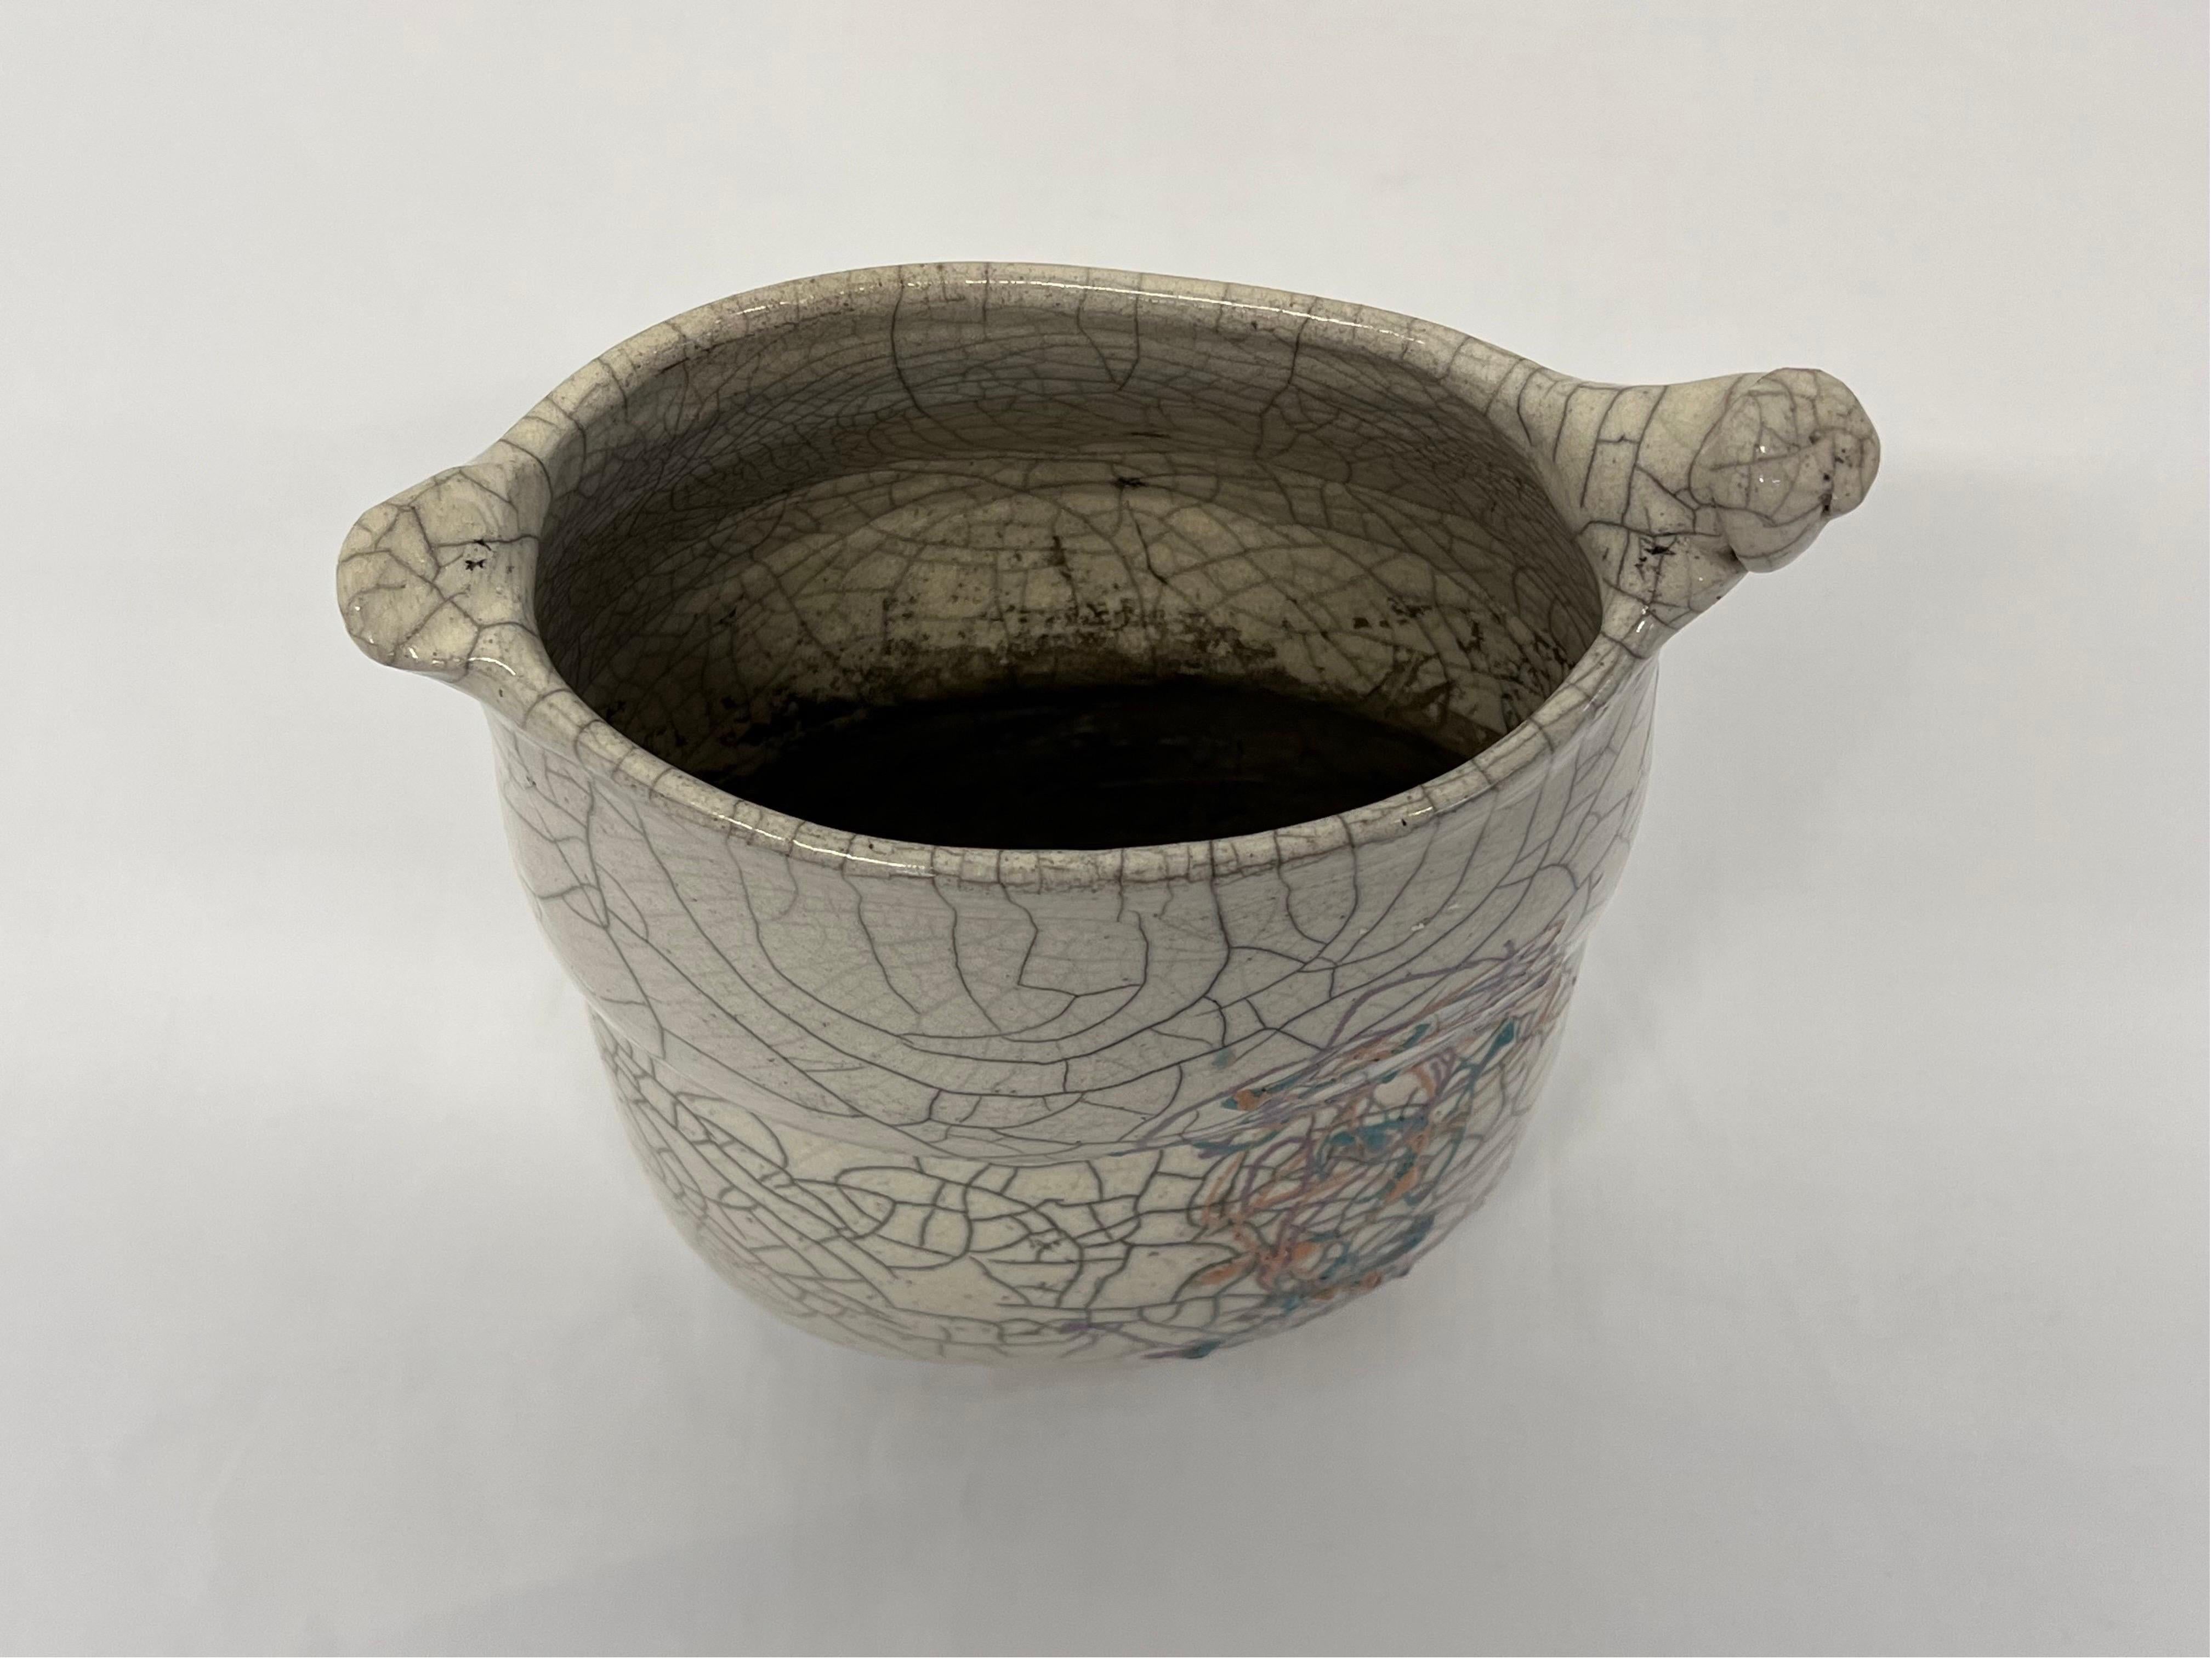 Postmodern Crackled Glaze Studio Pottery Vase with Colorful Design, 1980s For Sale 1